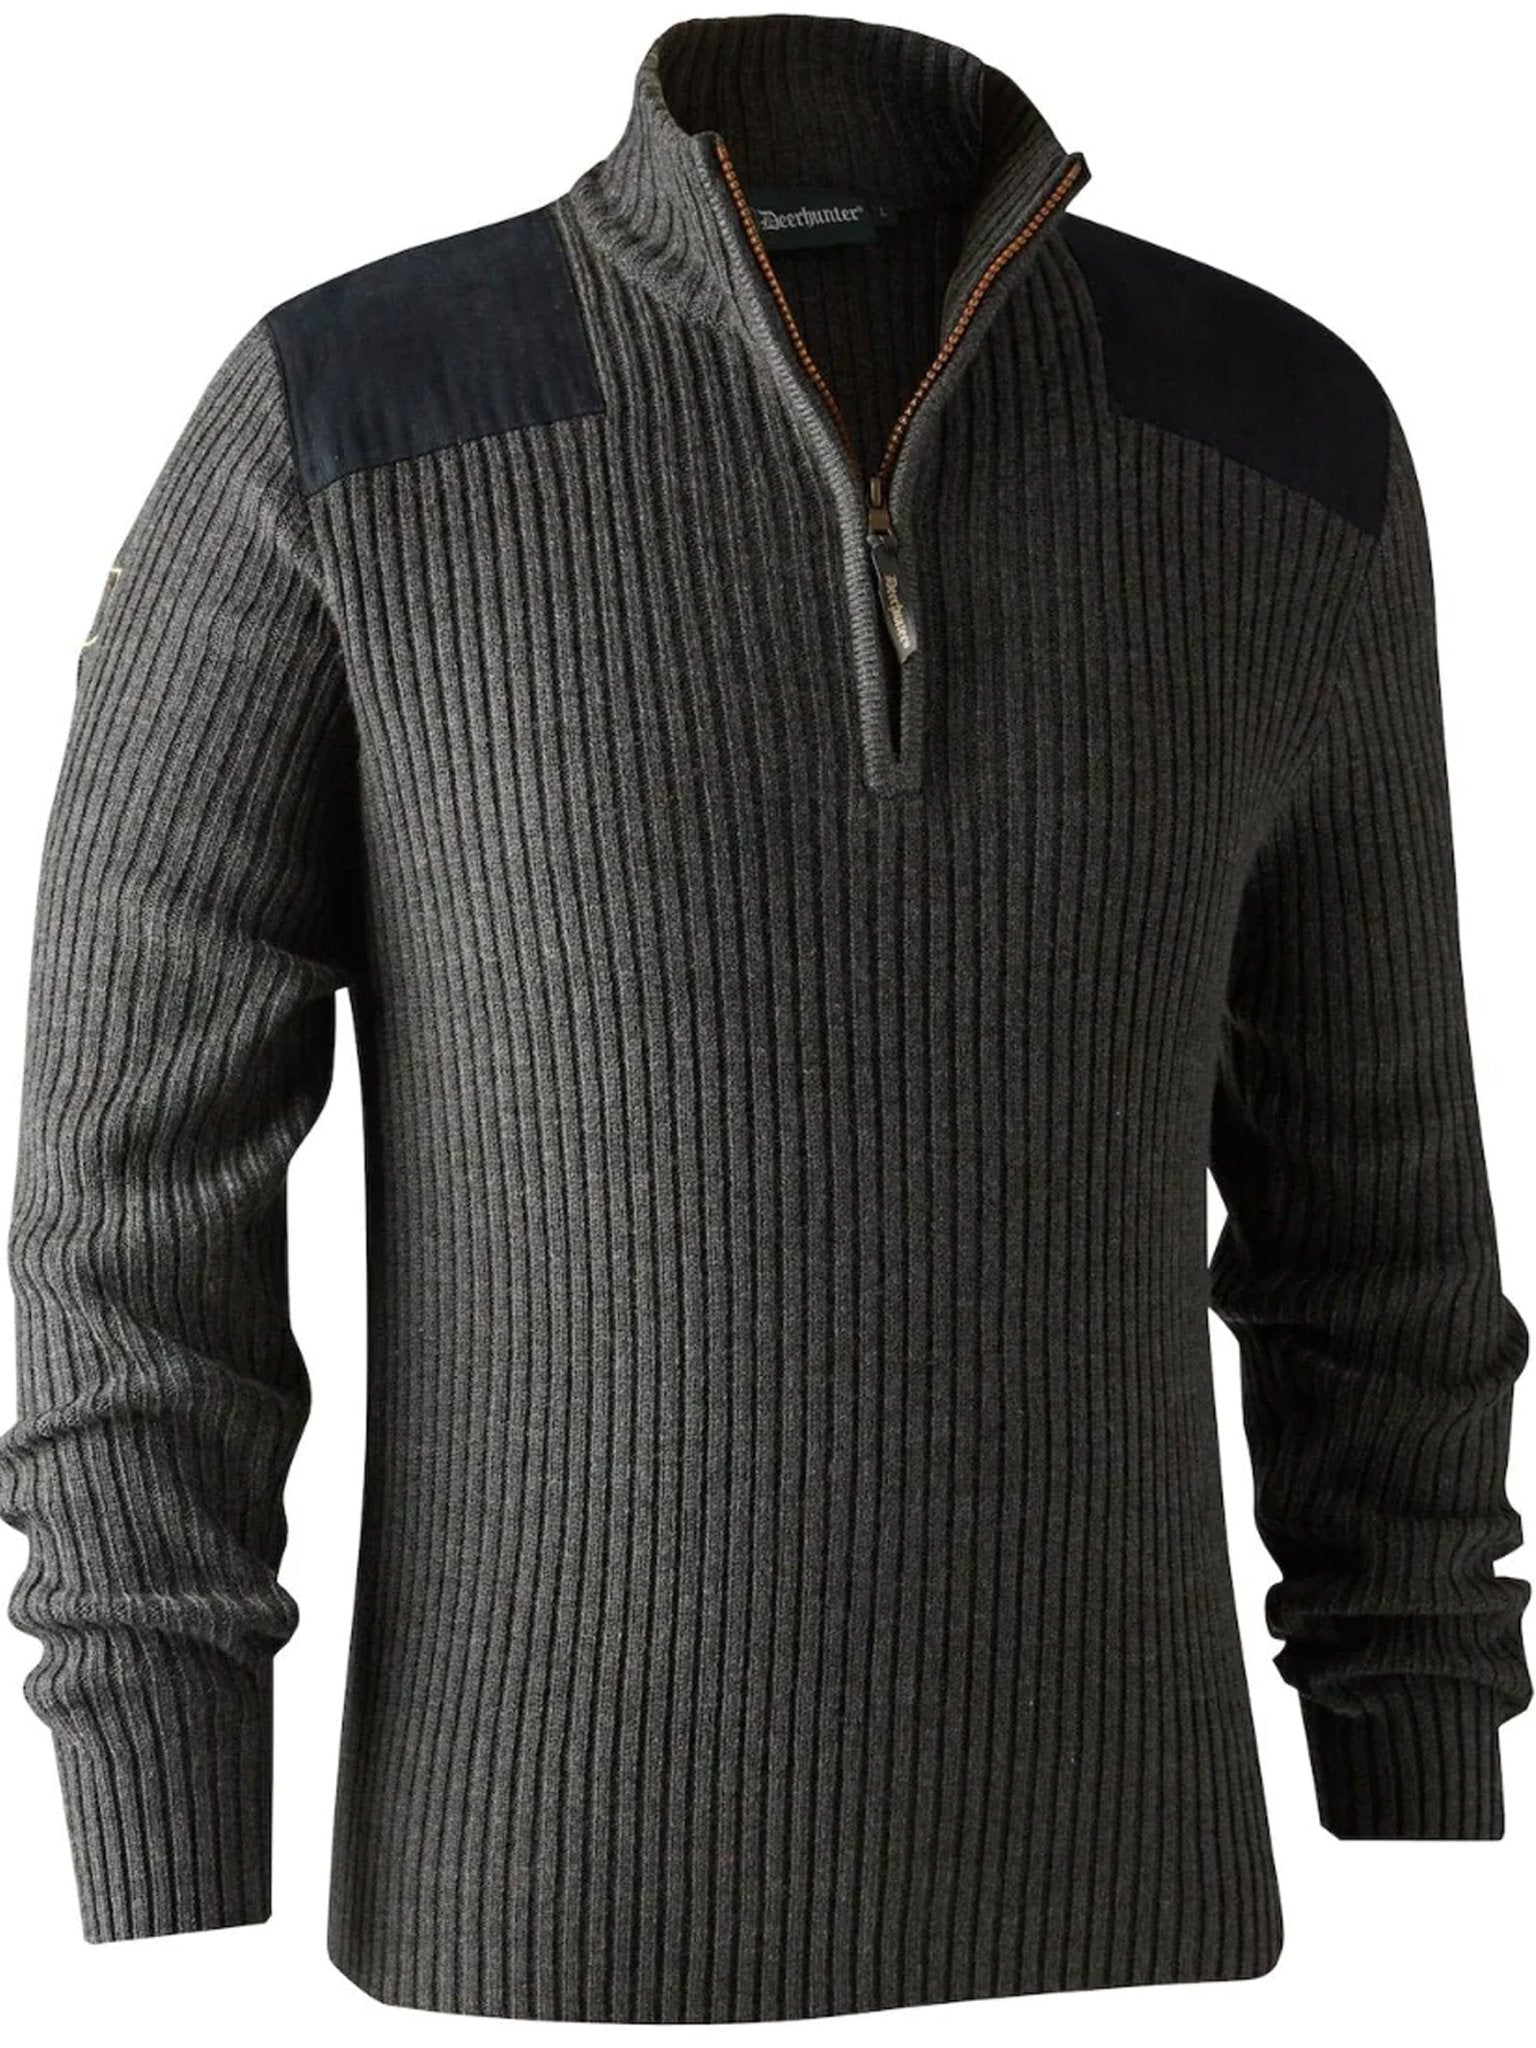 4elementsclothingDeerhunterDeerhunter - Rogaland knit pullover / jumper with quarter ZipKnitwear8726-957-S